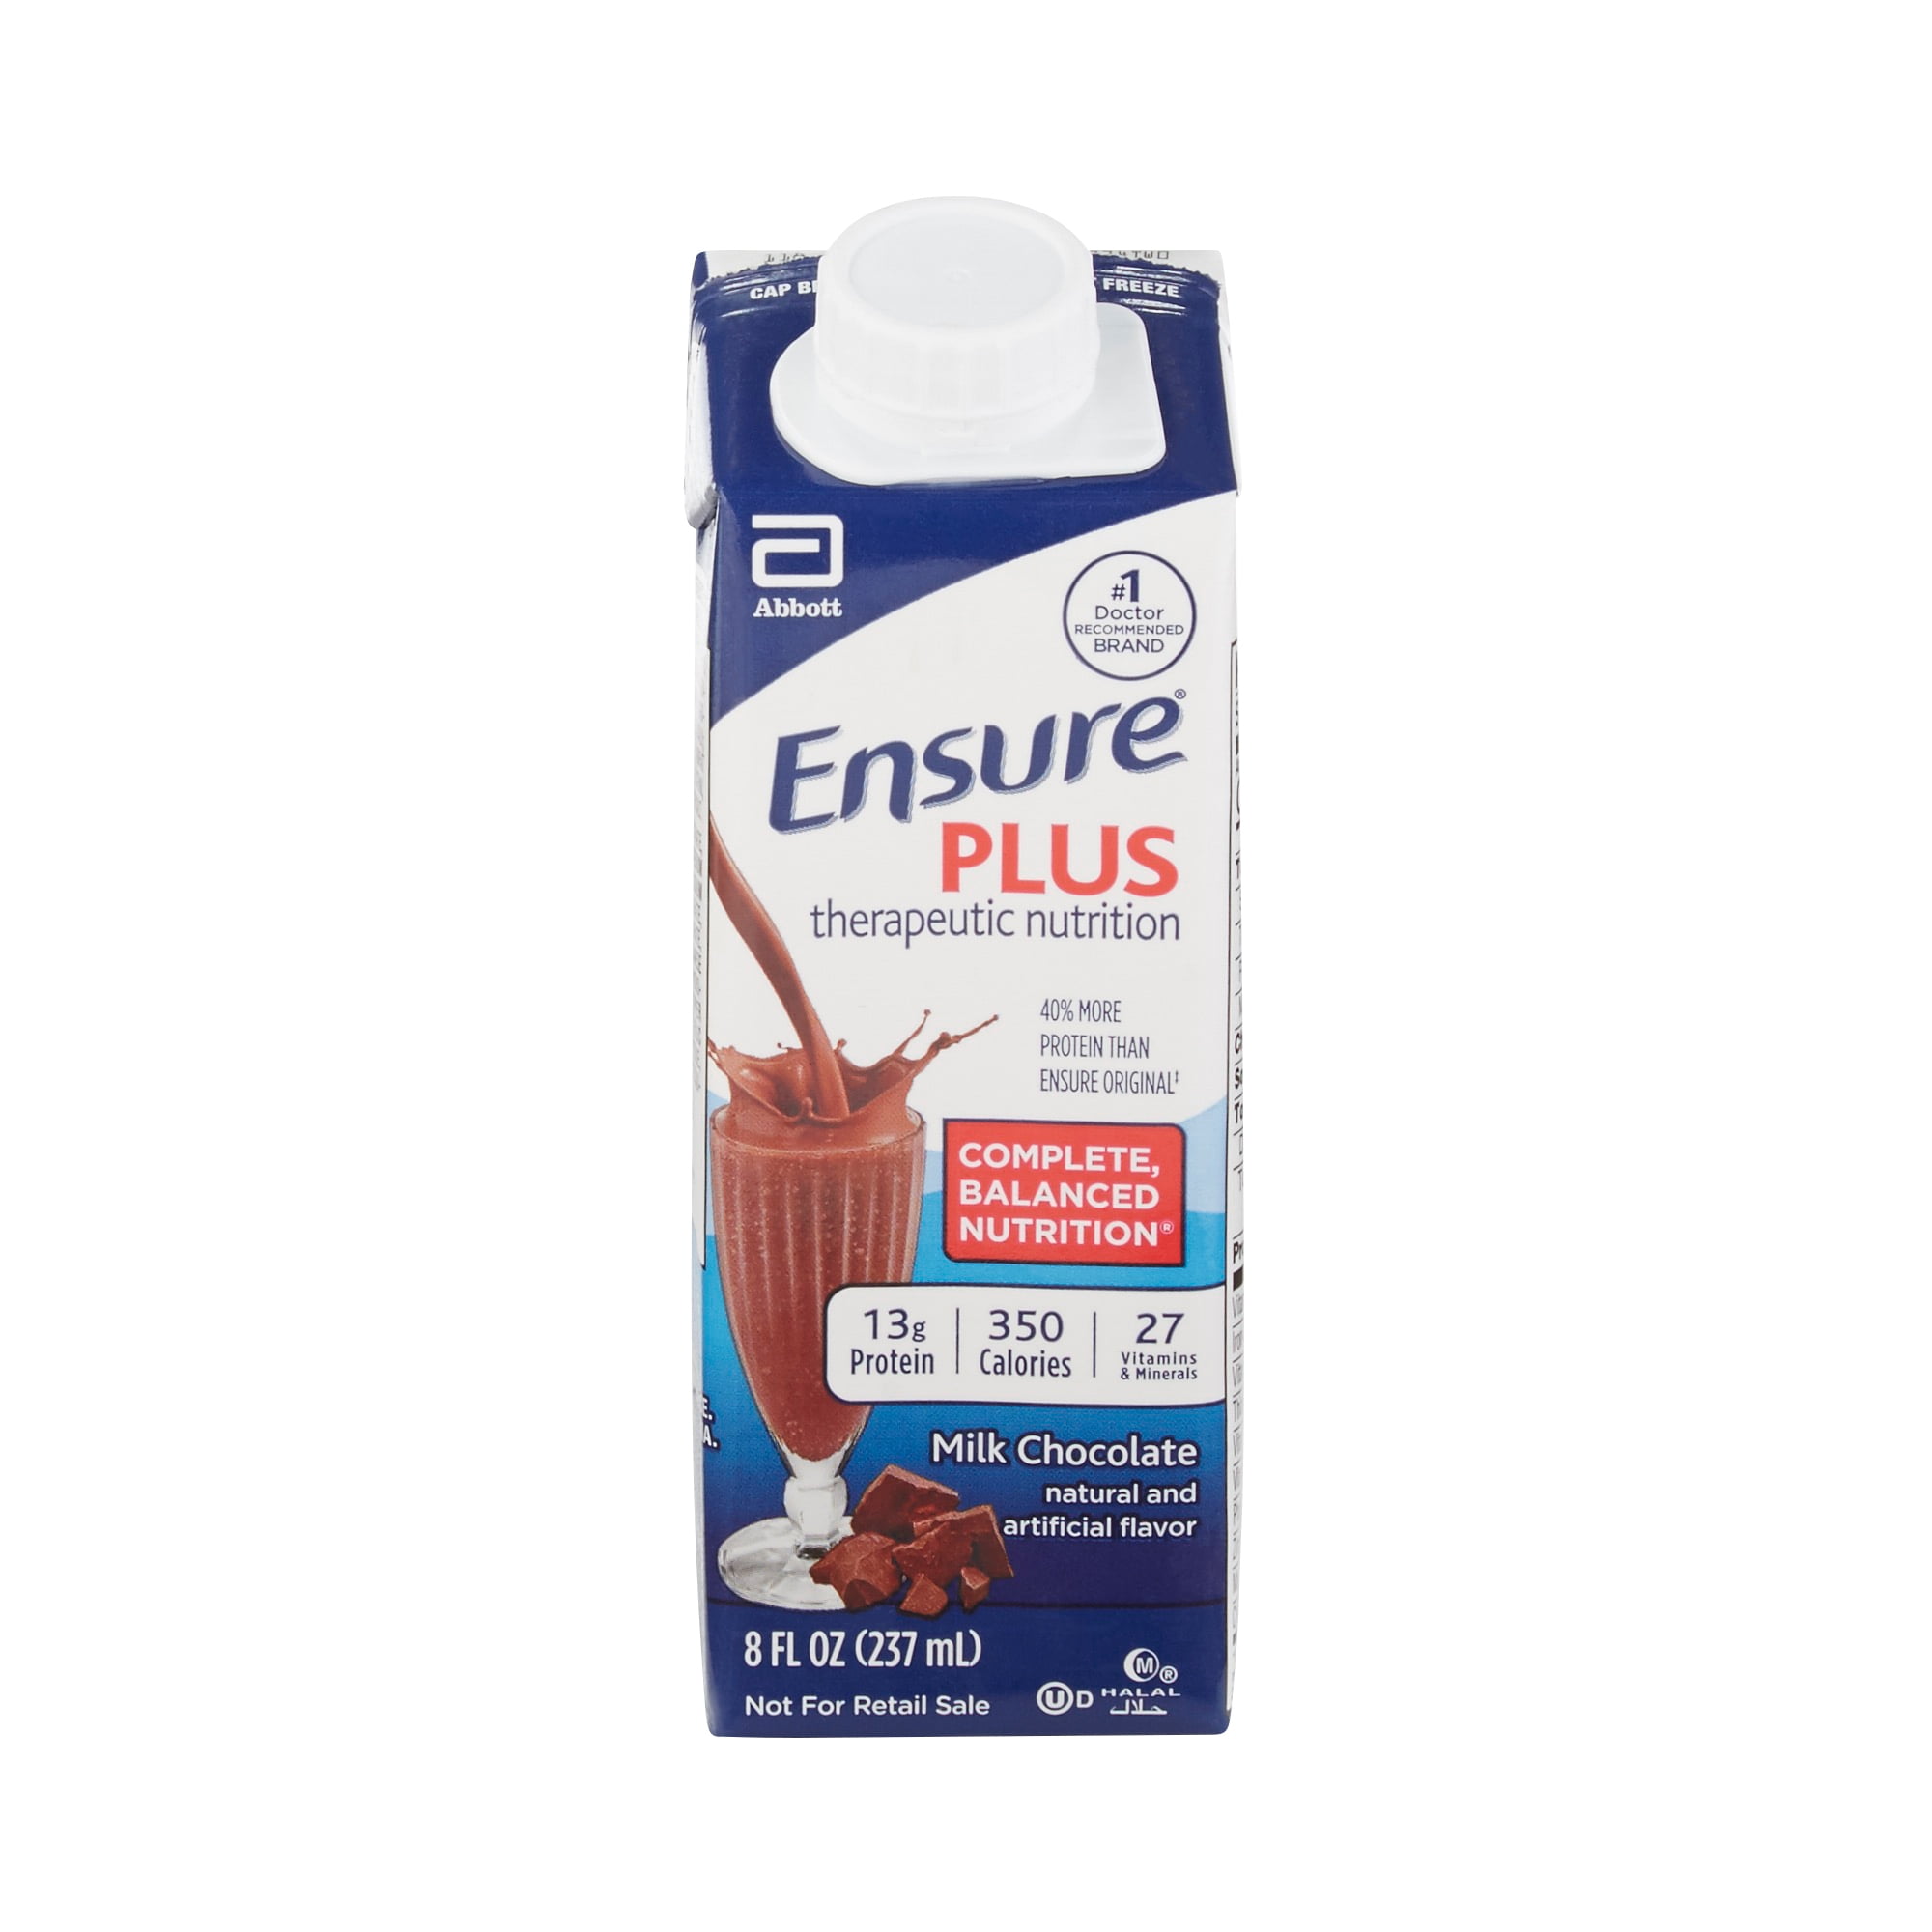 Buy Ensure Plus Nutrition Shake 8 oz Carton Abbott Online at Lowest Price  in Ubuy Philippines. 335211999